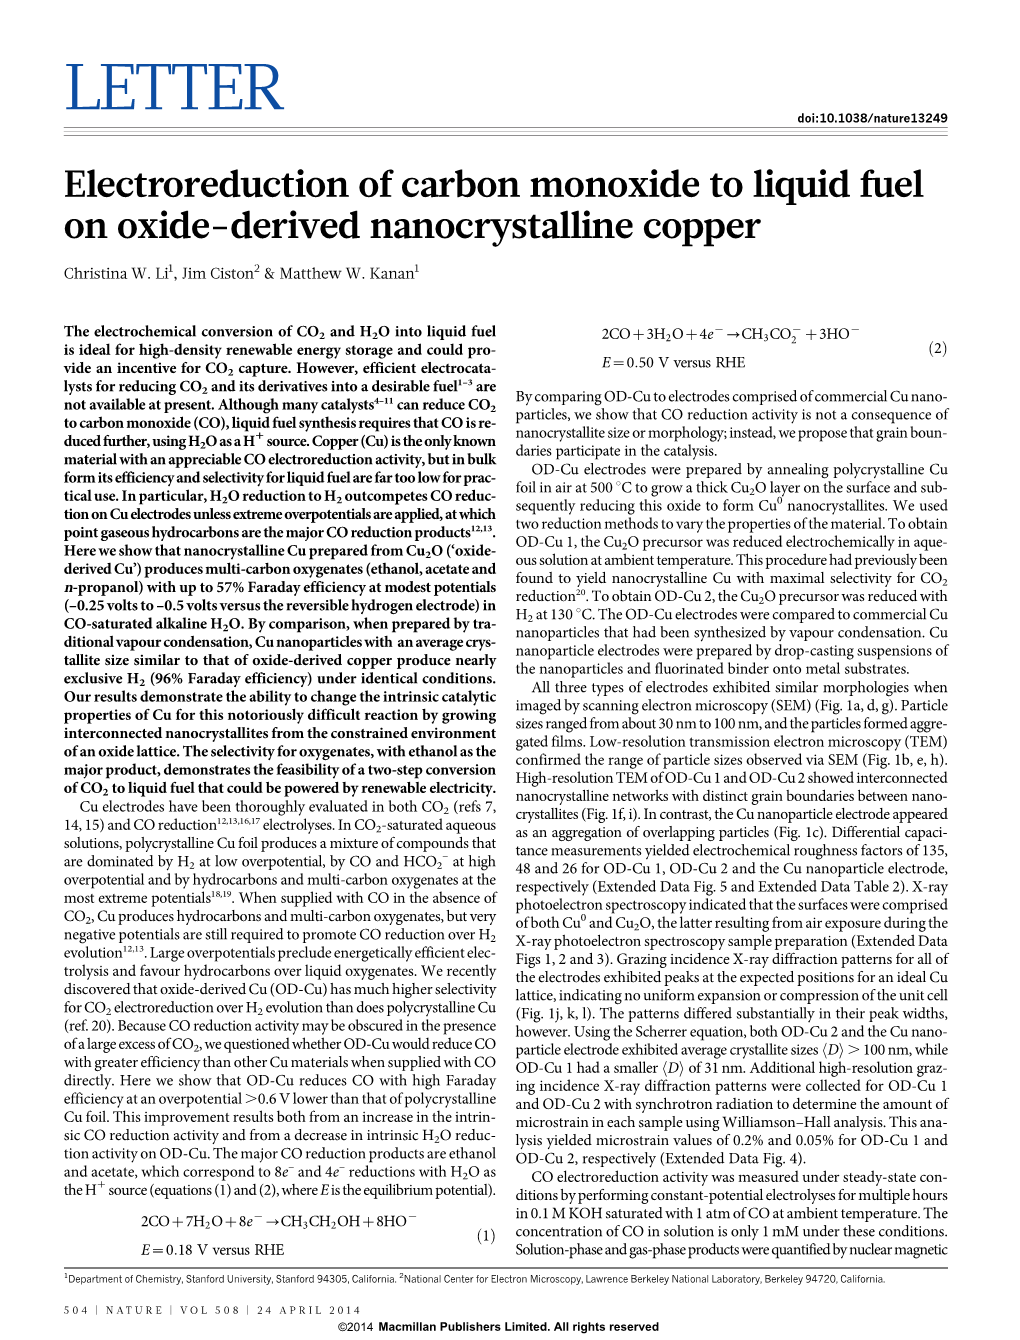 Electroreduction of Carbon Monoxide to Liquid Fuel on Oxide-Derived Nanocrystalline Copper